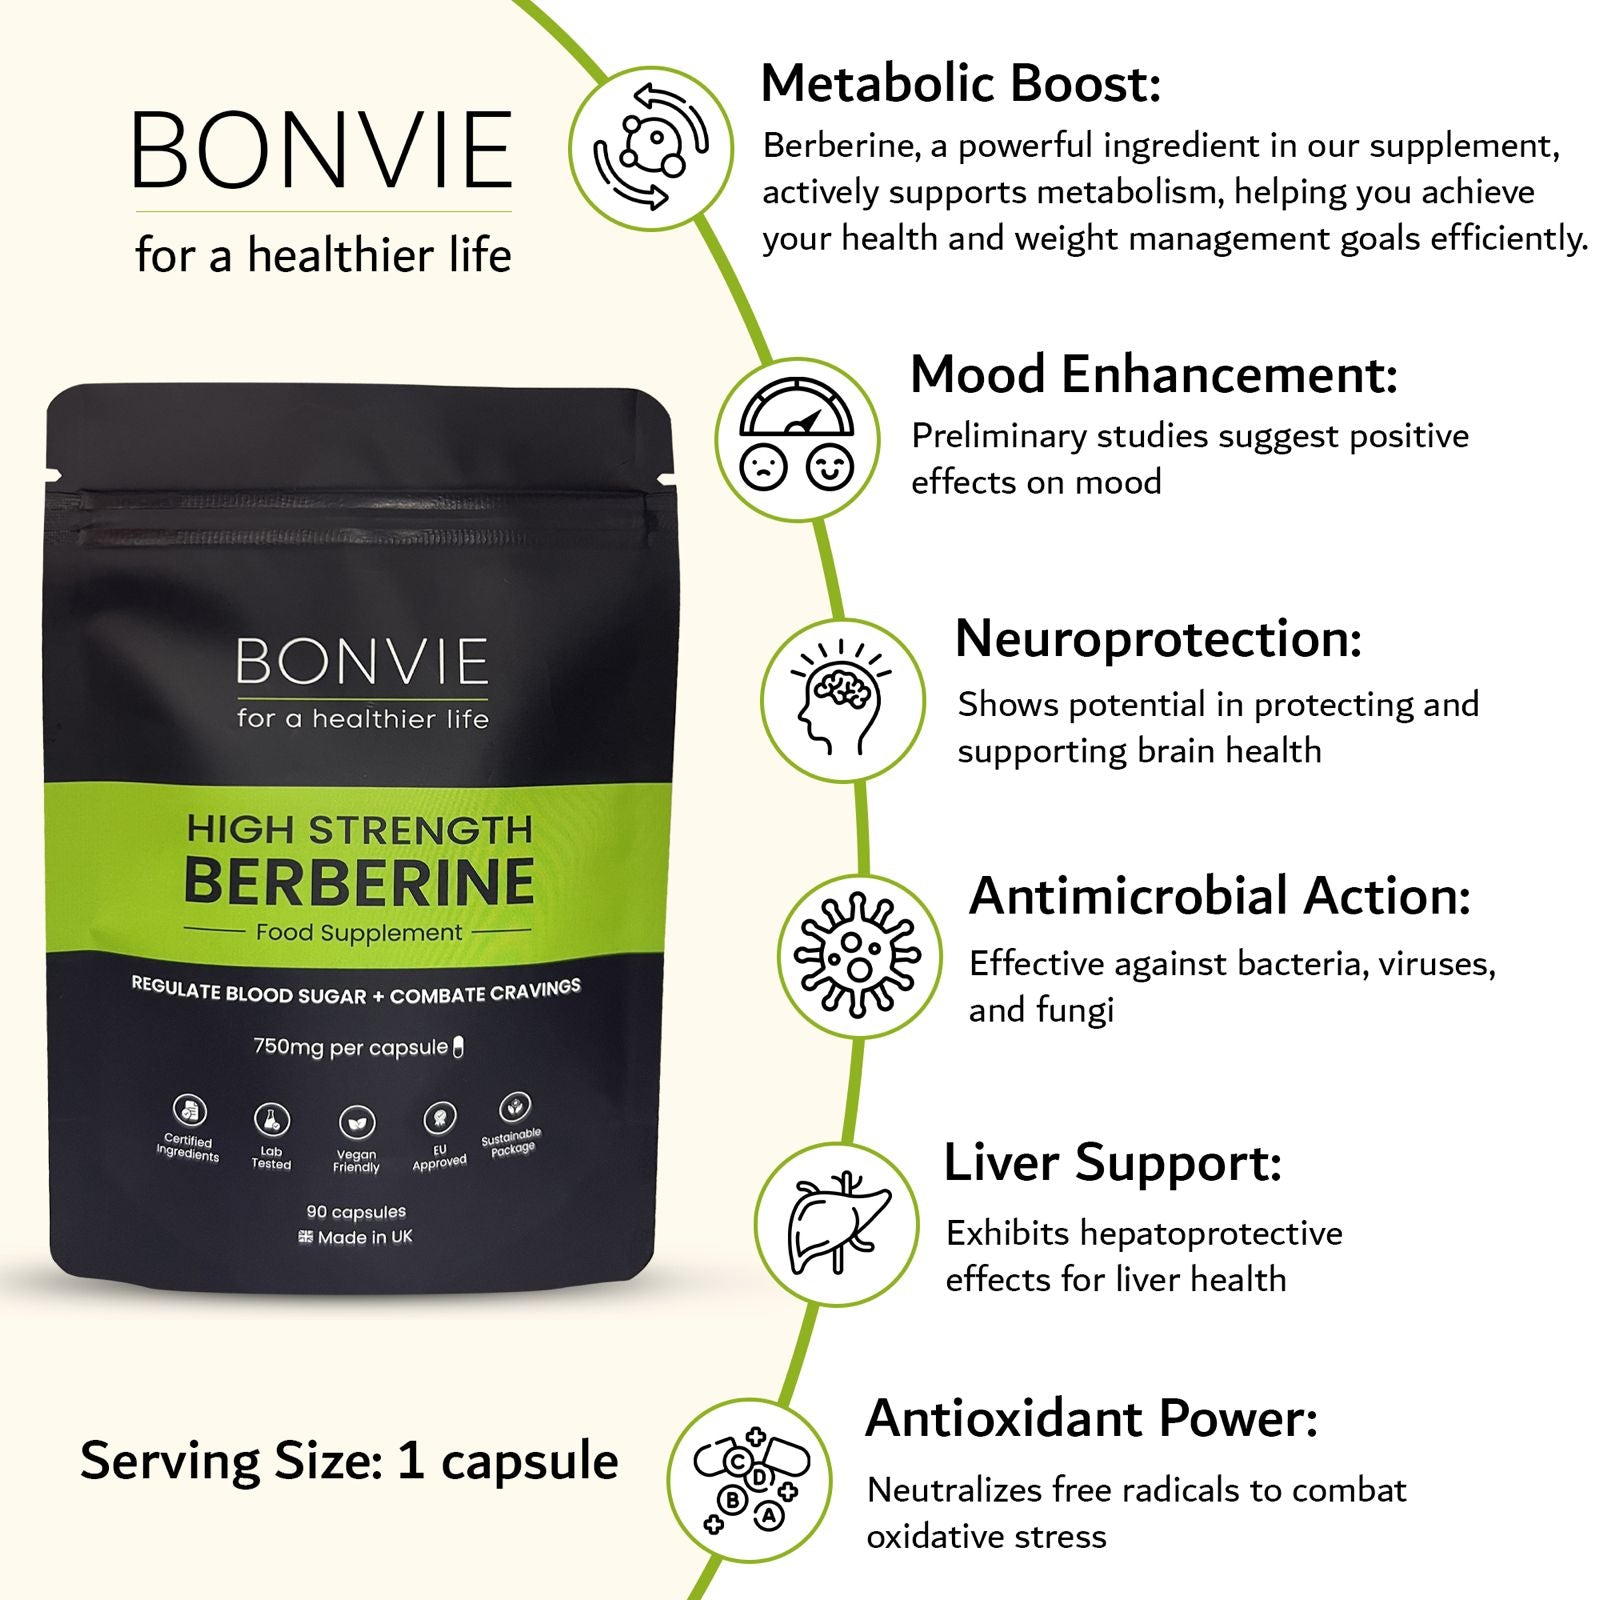 Feel The Benefits of Better Berberine